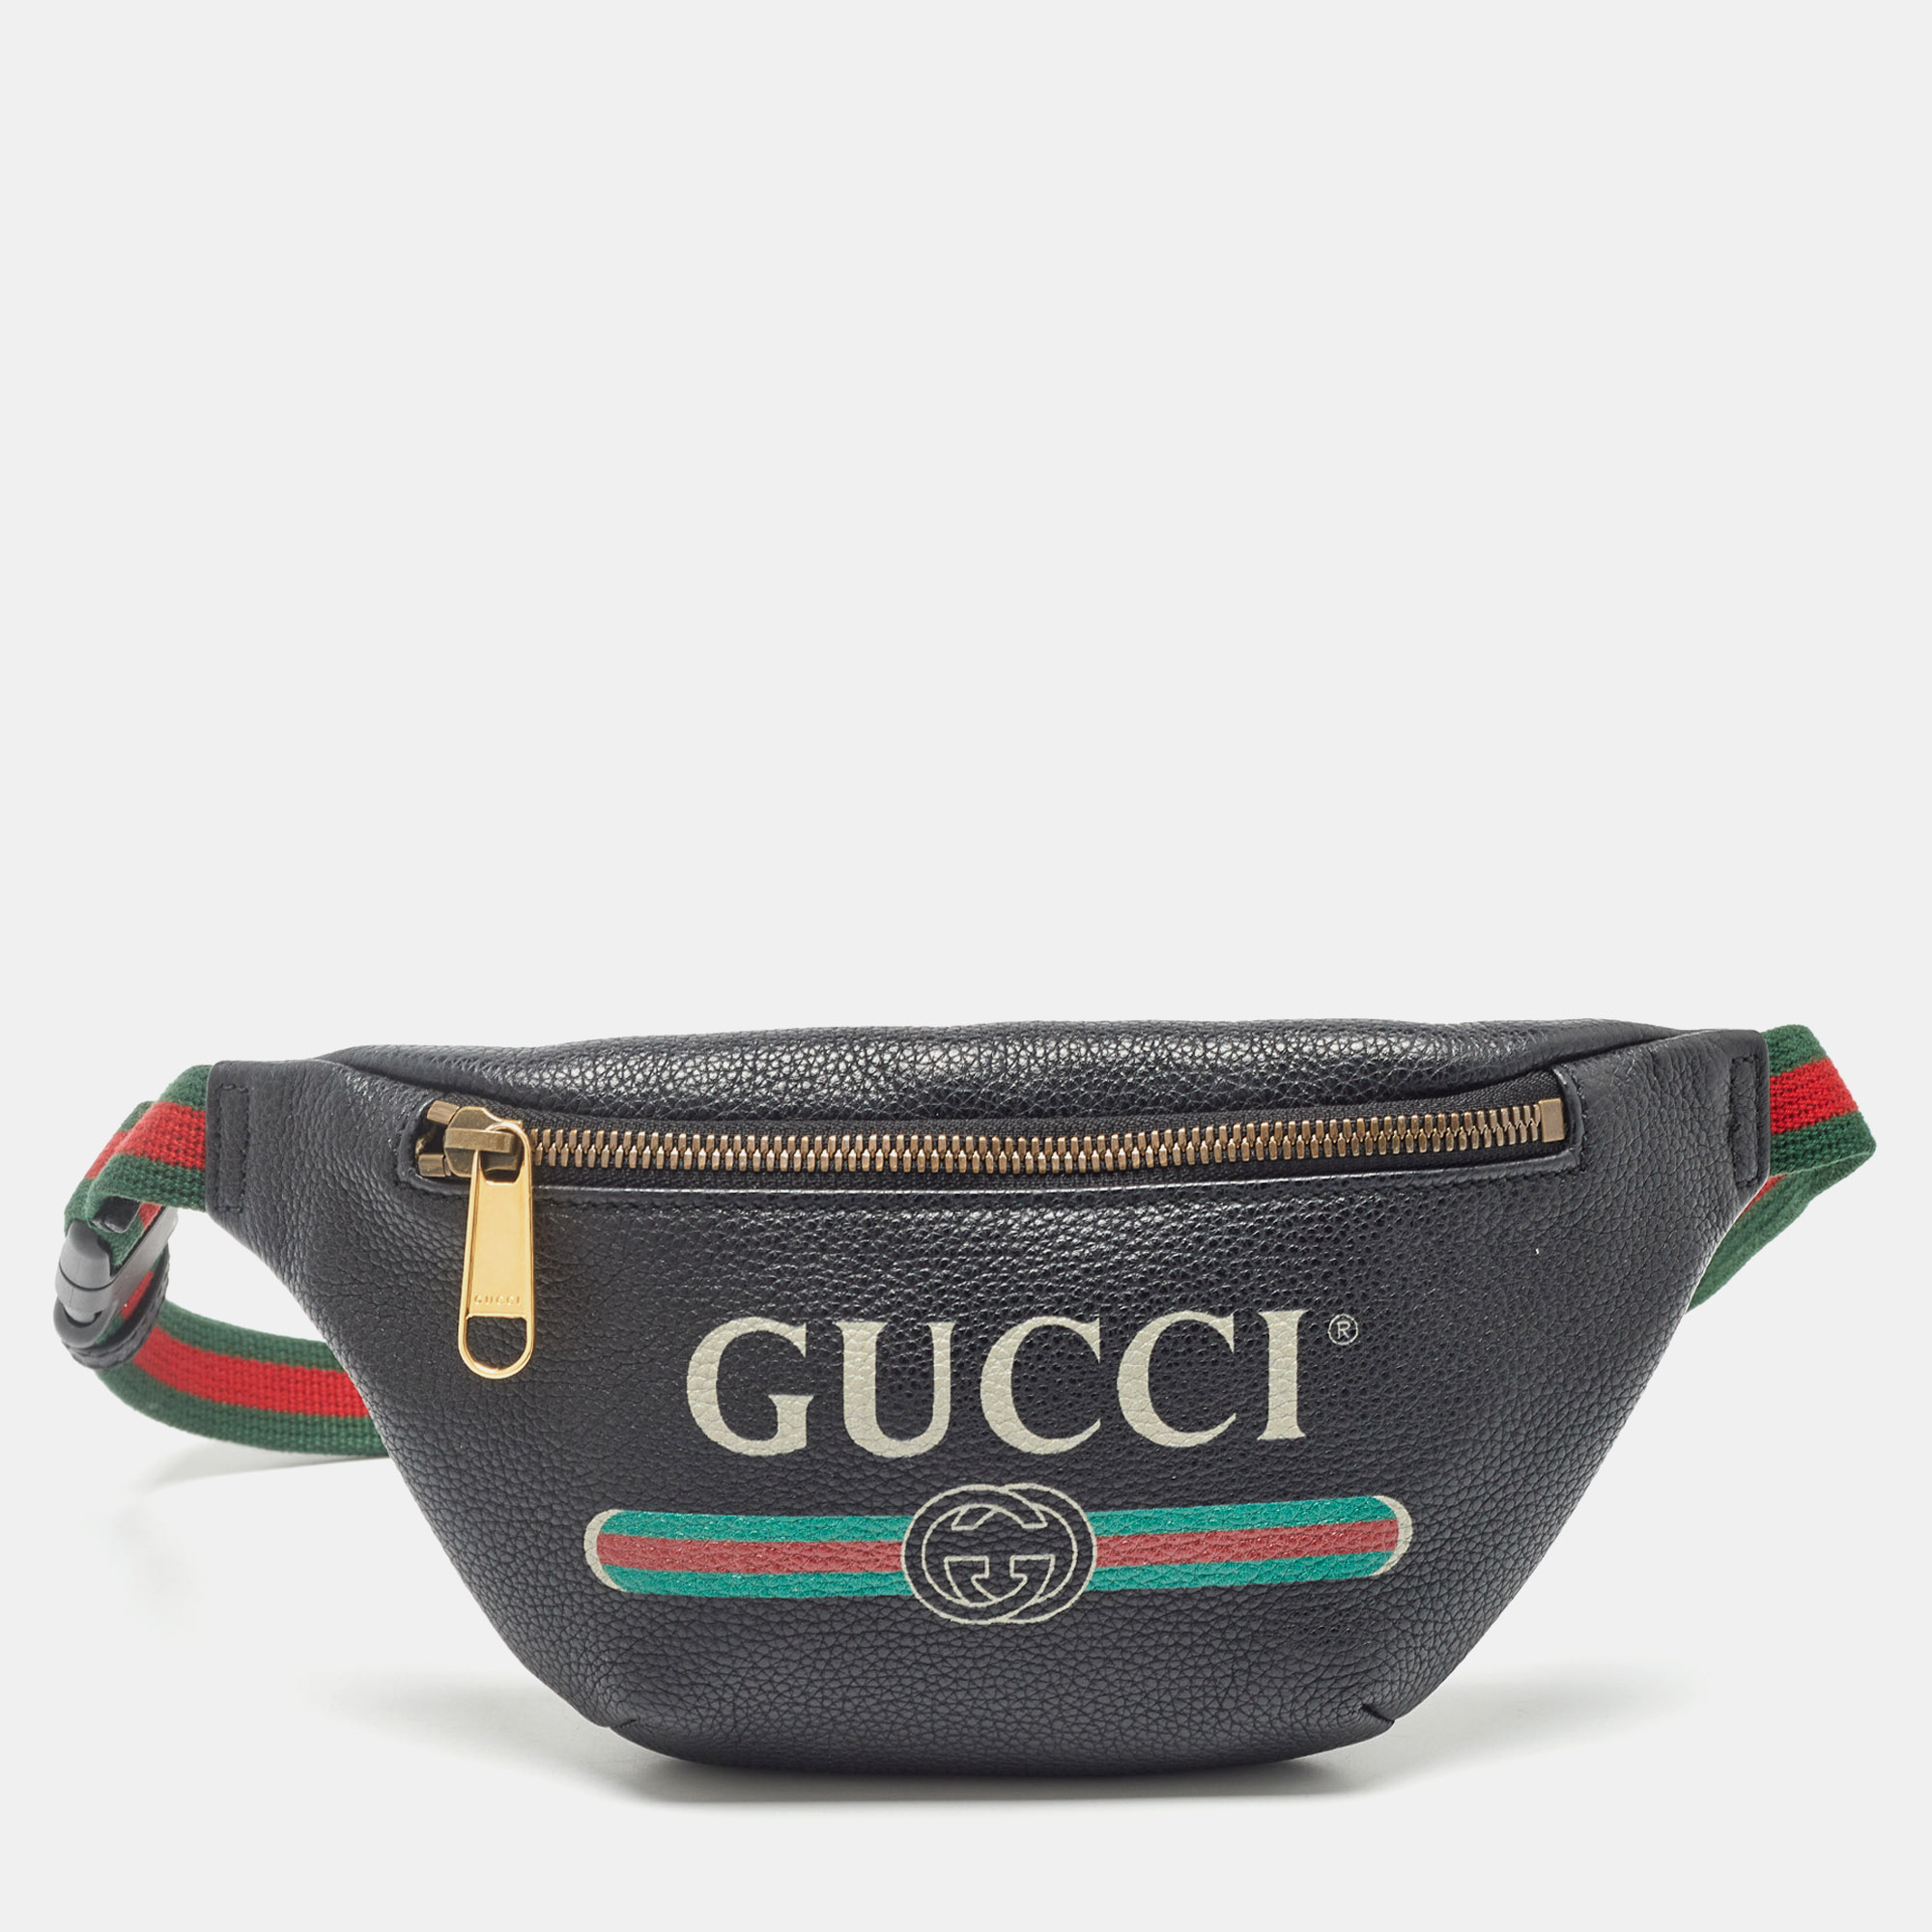 Gucci black leather small logo belt bag